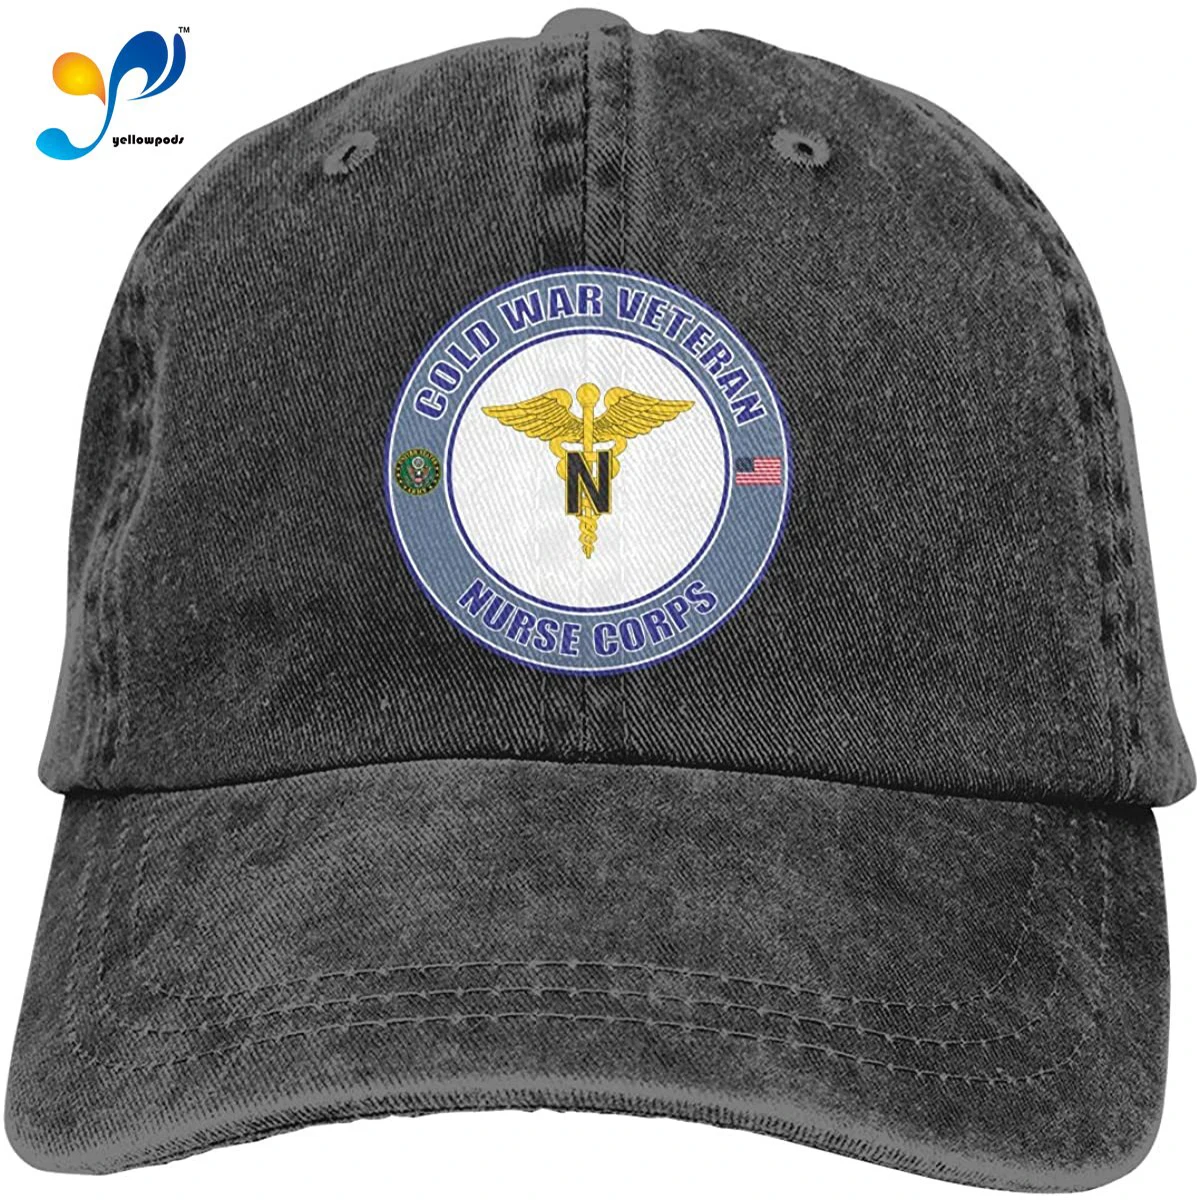 

Us Army Cold War Nurse Corps Veteran Unisex Soft Casquette Cap Fashion Hat Vintage Adjustable Baseball Caps